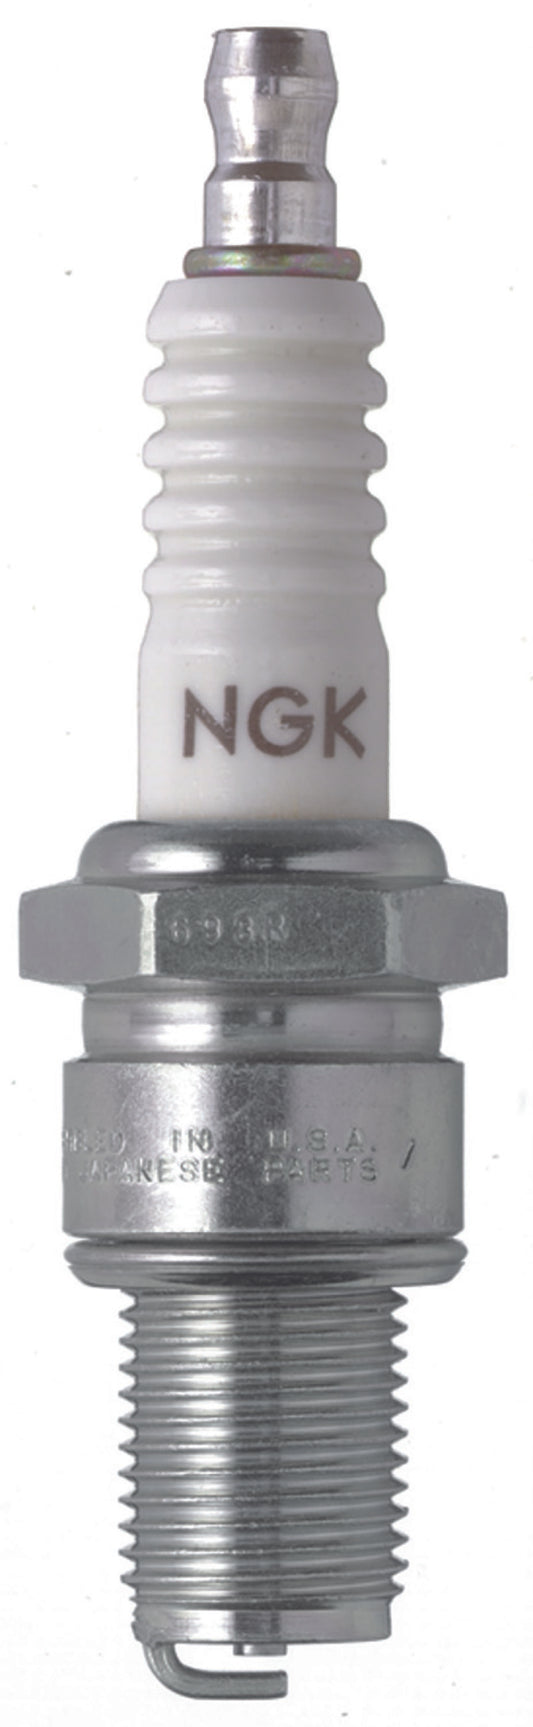 NGK Copper Core Spark Plug Box of 4 (B10ES)